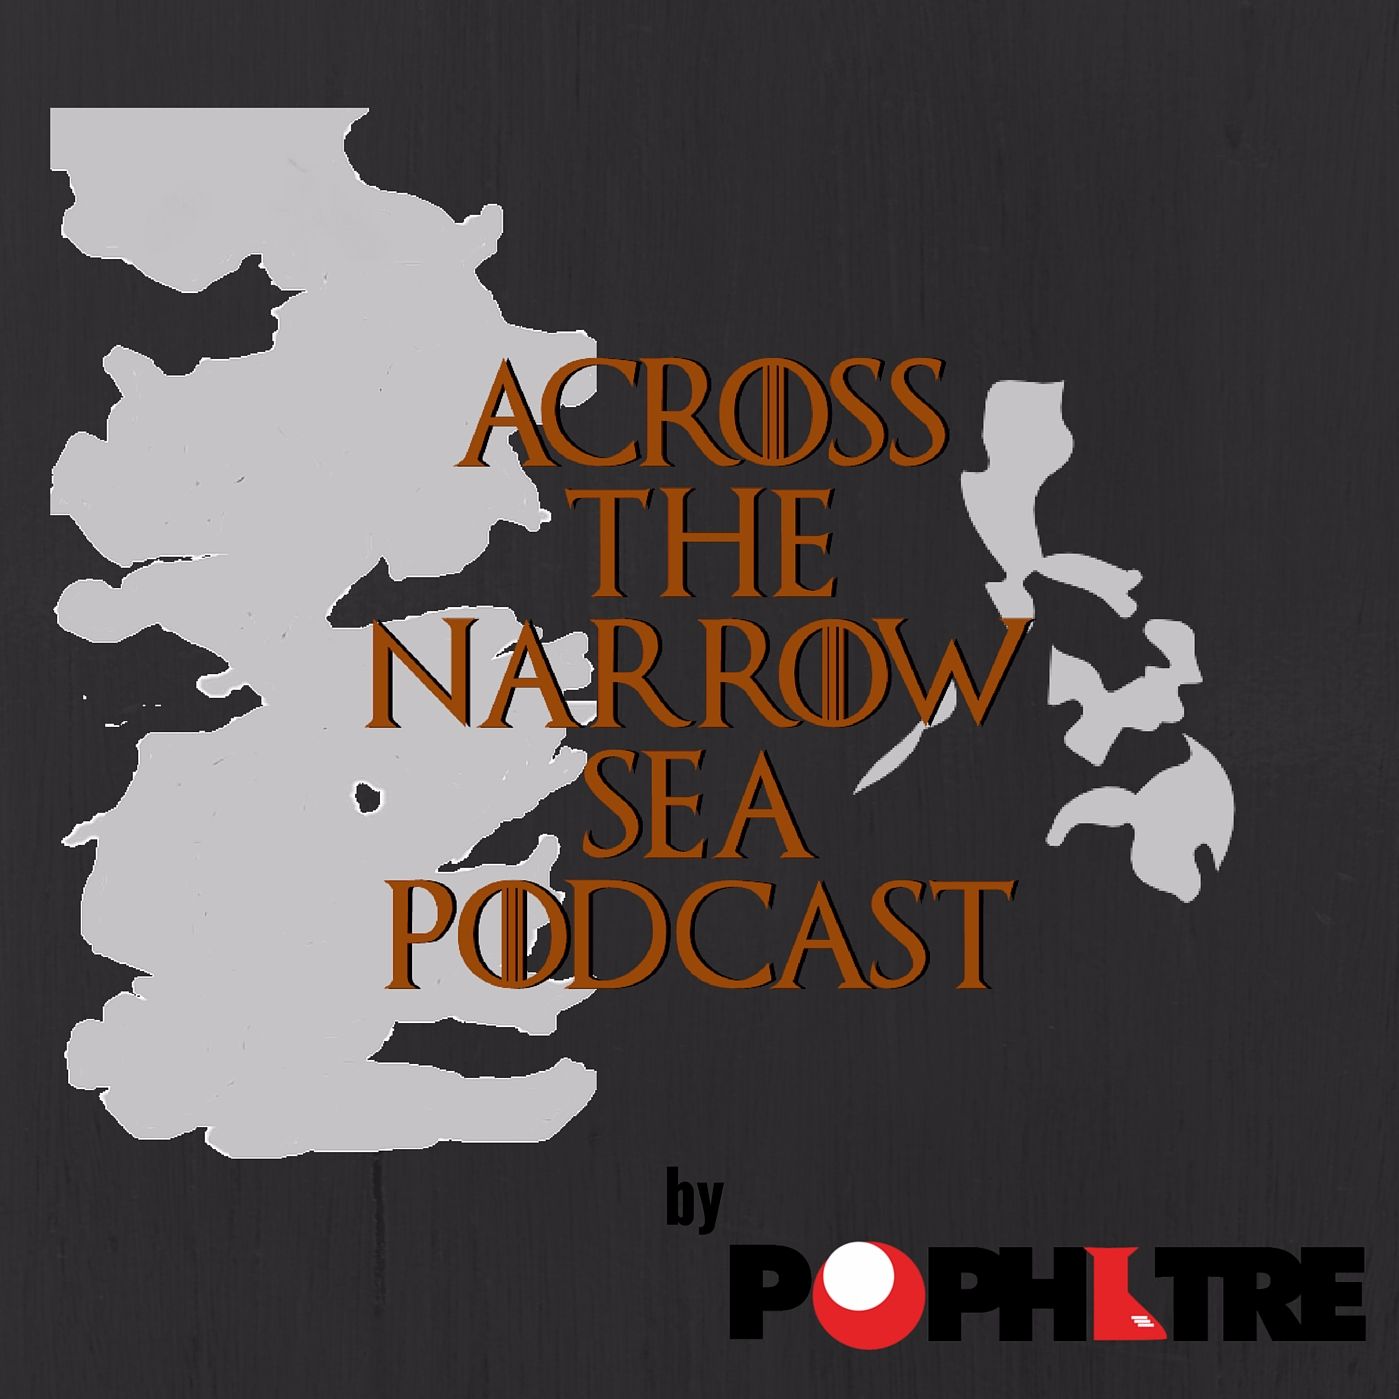 Across The Narrow Sea Podcast 08 - The Broken Man